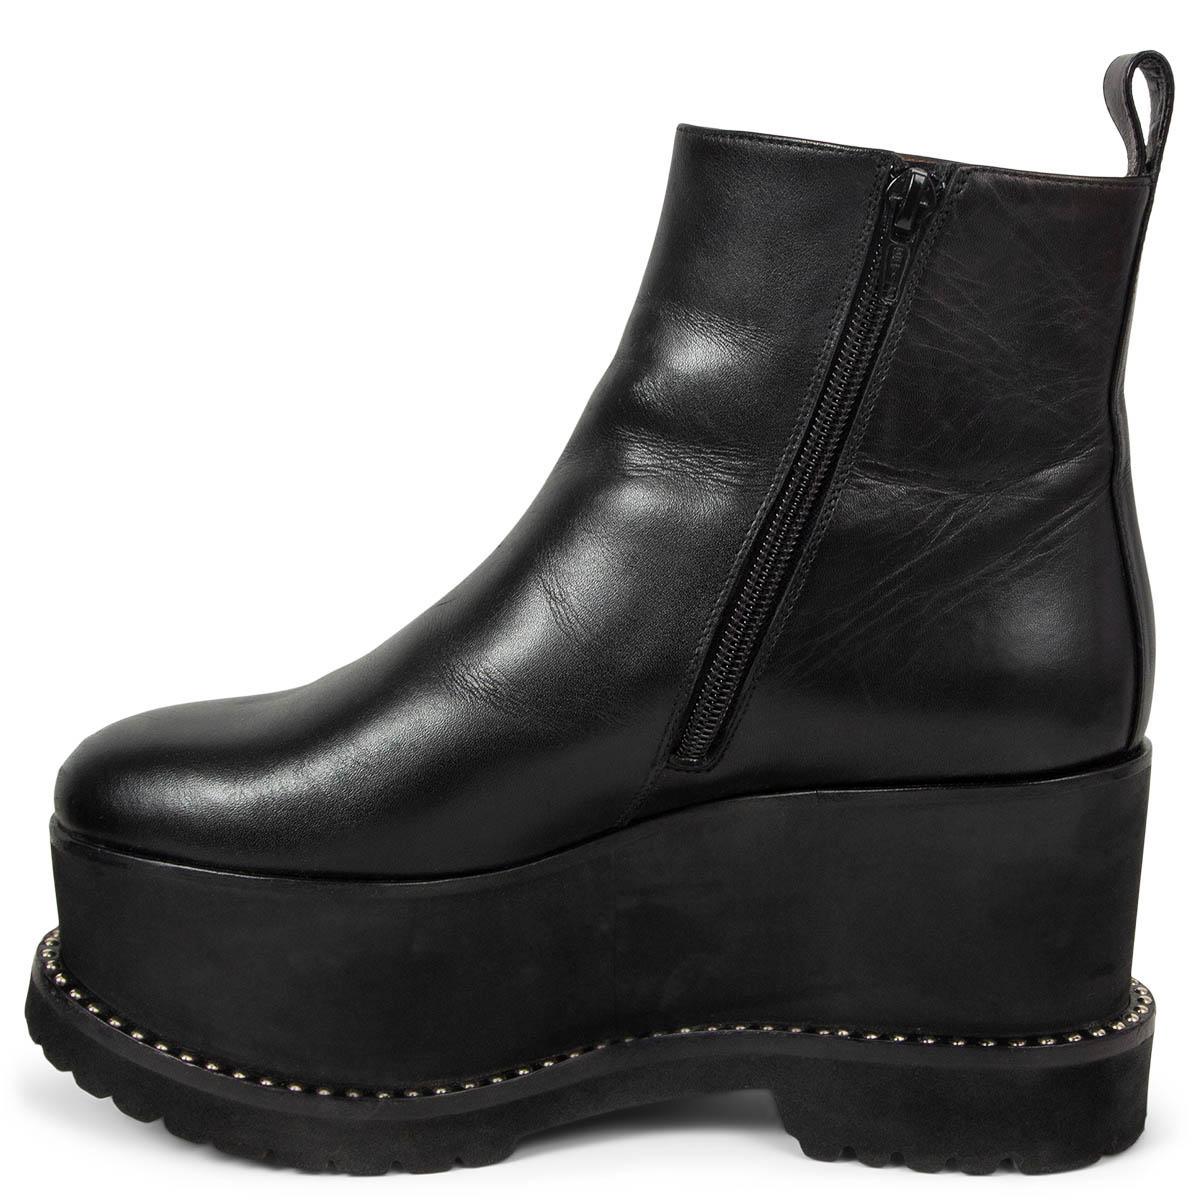 Black GIVENCHY black leather 2016 STUDDED PLATFORM WEDGE Ankle Boots Shoes 36 For Sale